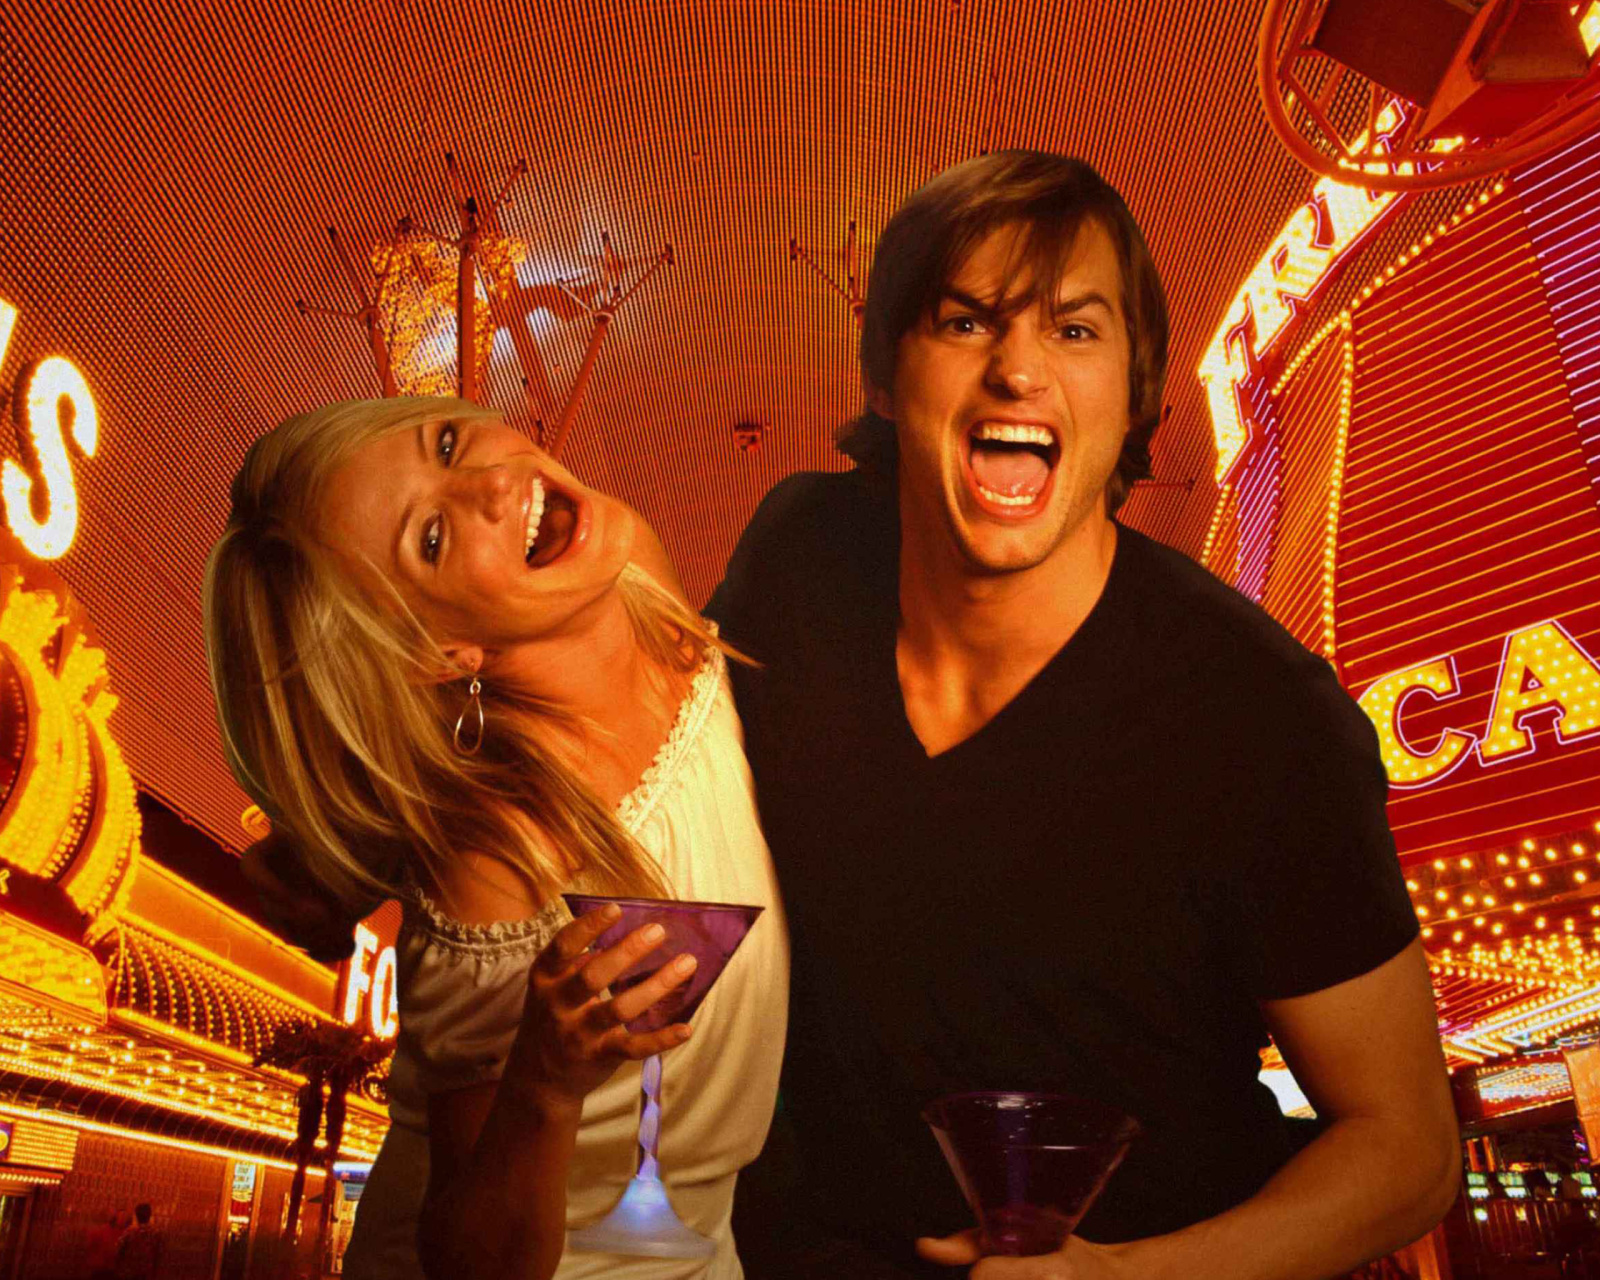 Das Cameron Diaz And Ashton Kutcher in What Happens in Vegas Wallpaper 1600x1280